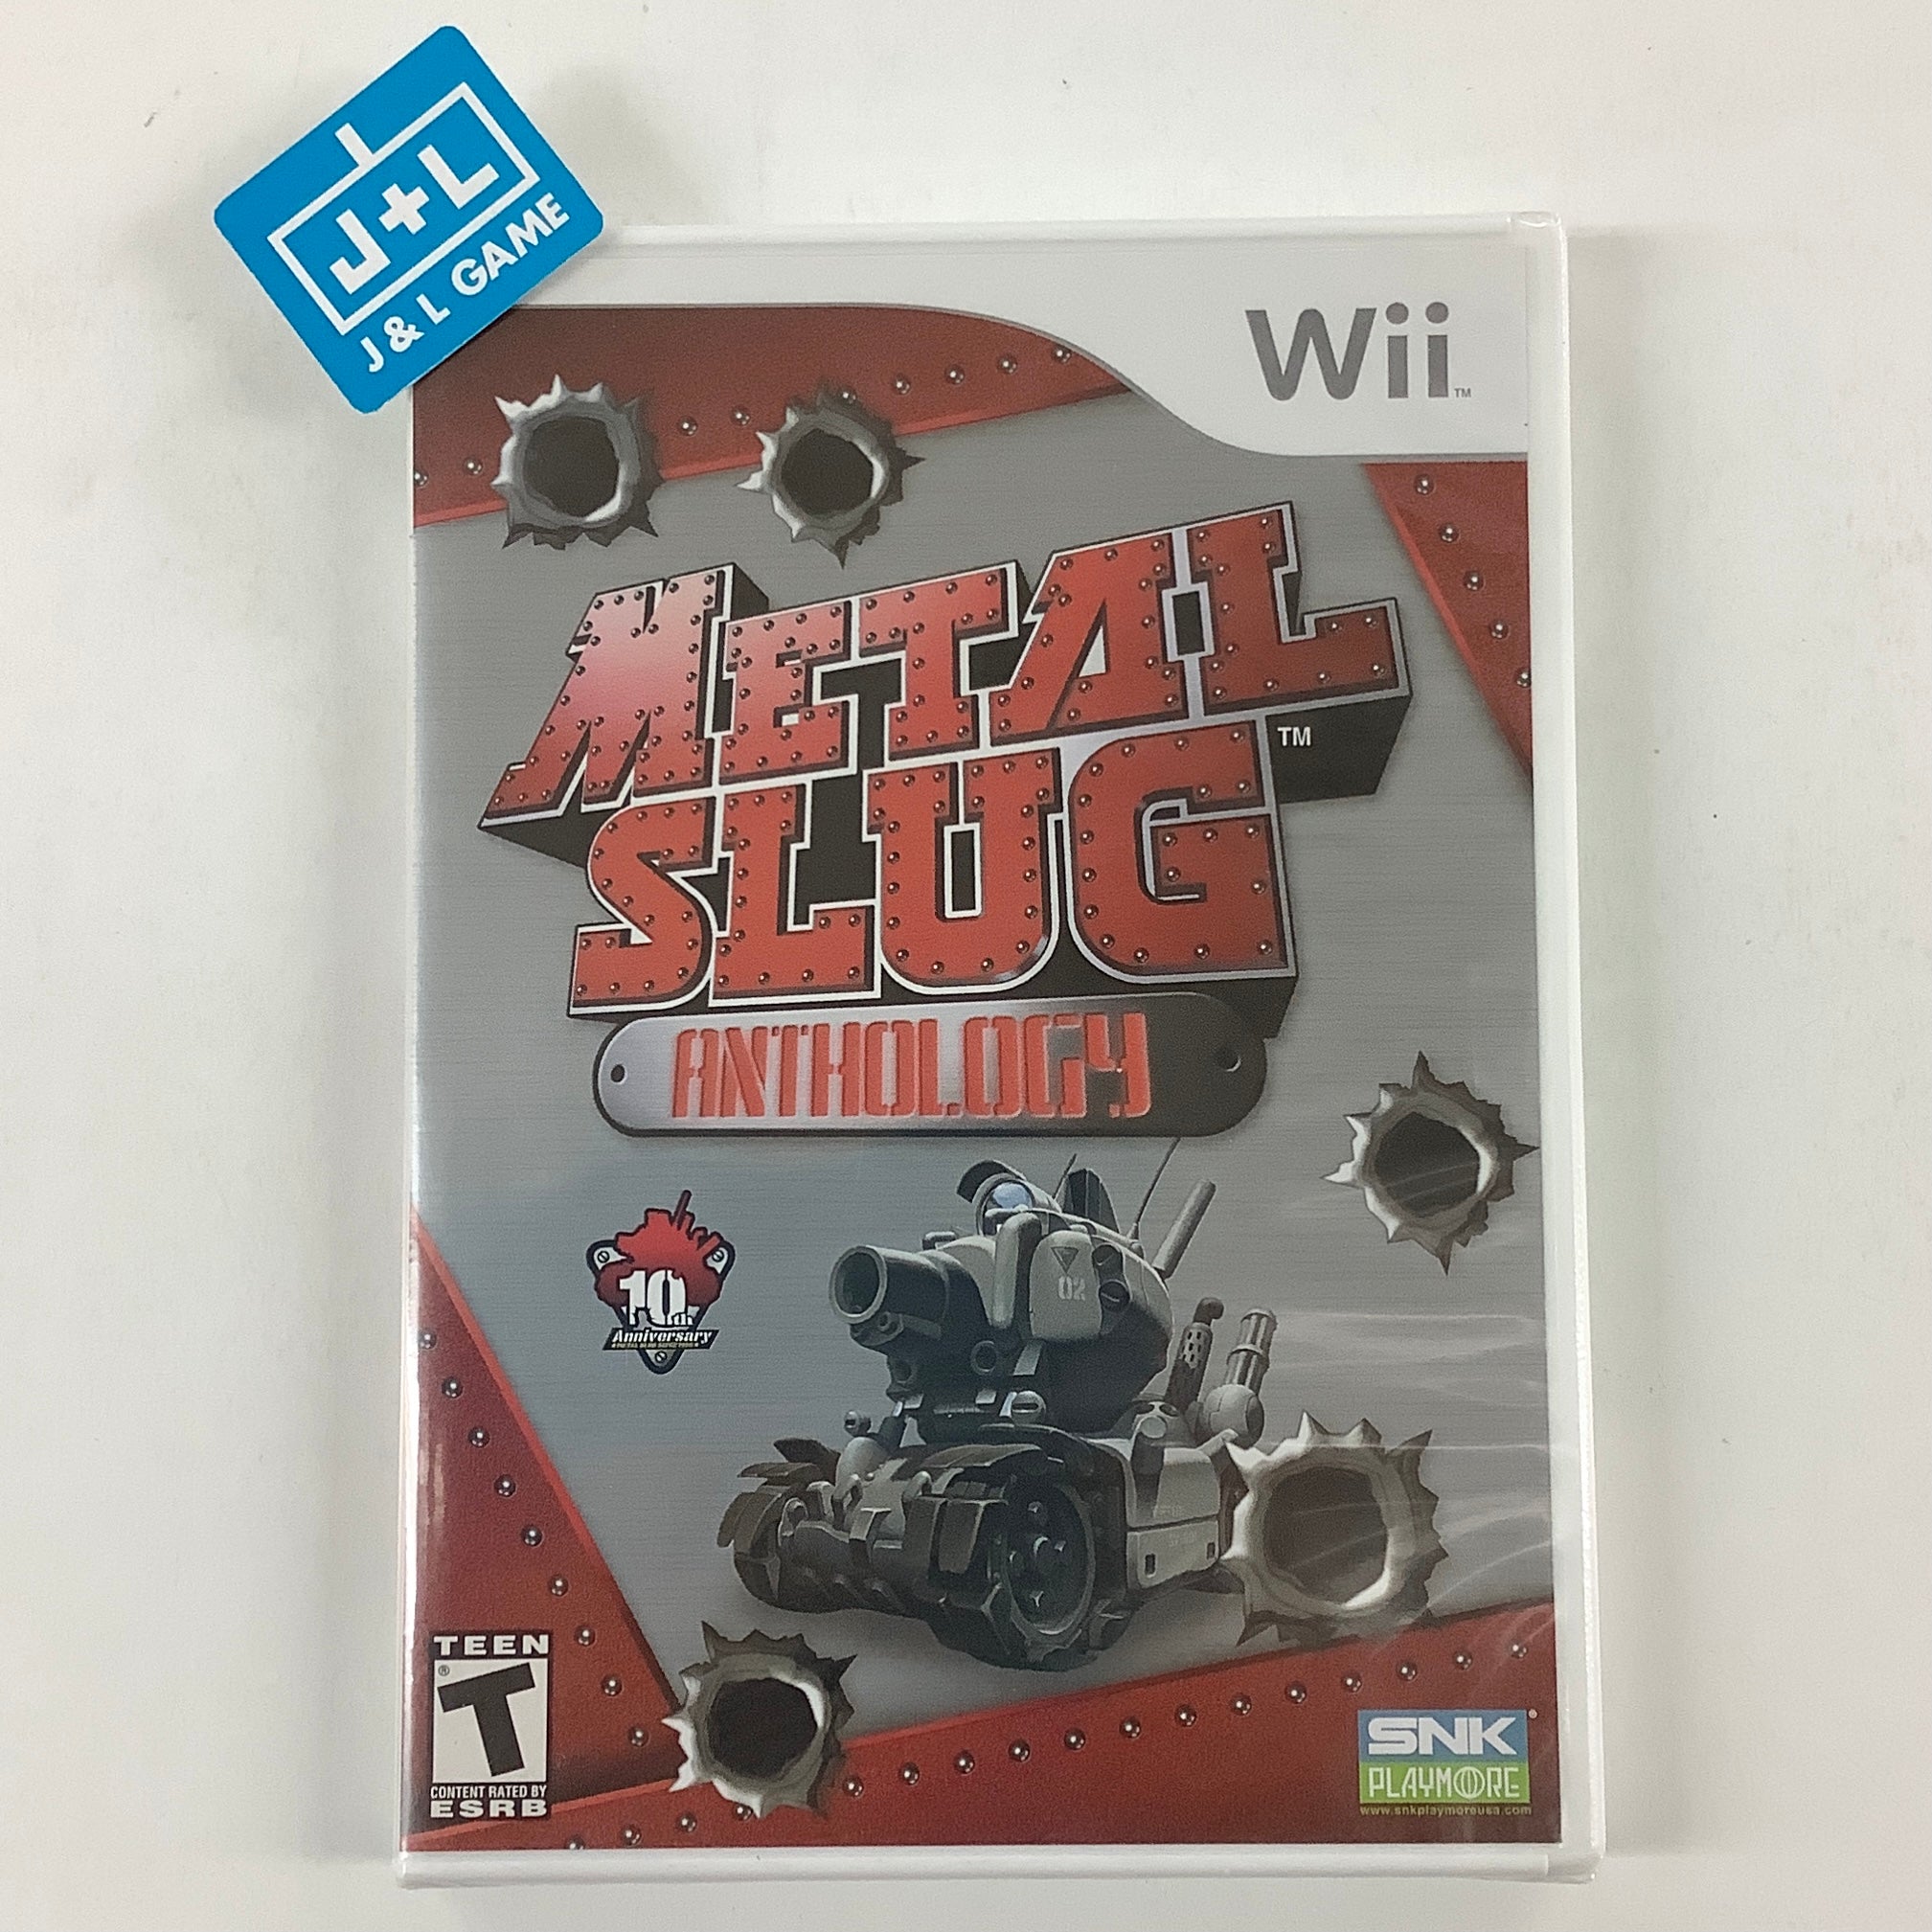 Metal Slug Anthology - Nintendo Wii Video Games Ignition Entertainment   